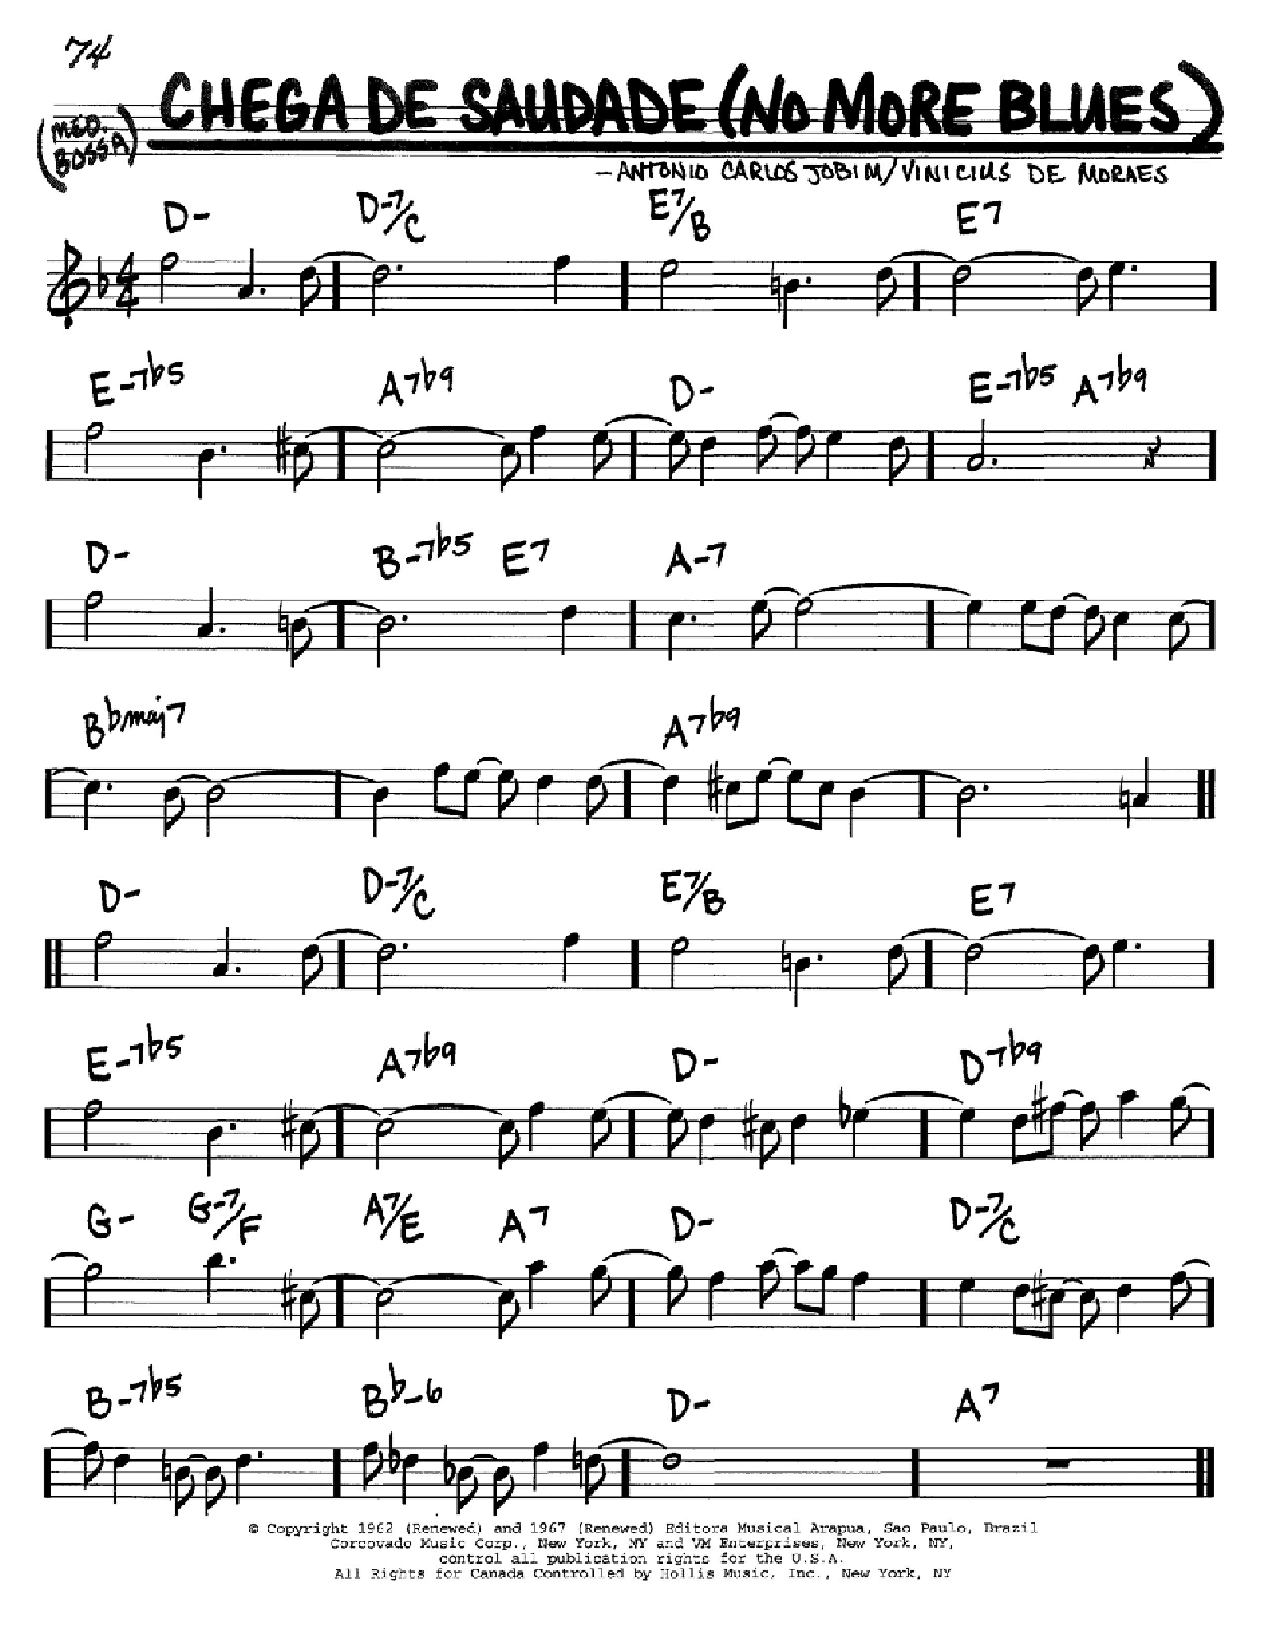 Antonio Carlos Jobim Chega De Saudade (No More Blues) Sheet Music Notes & Chords for Real Book - Melody & Chords - Eb Instruments - Download or Print PDF